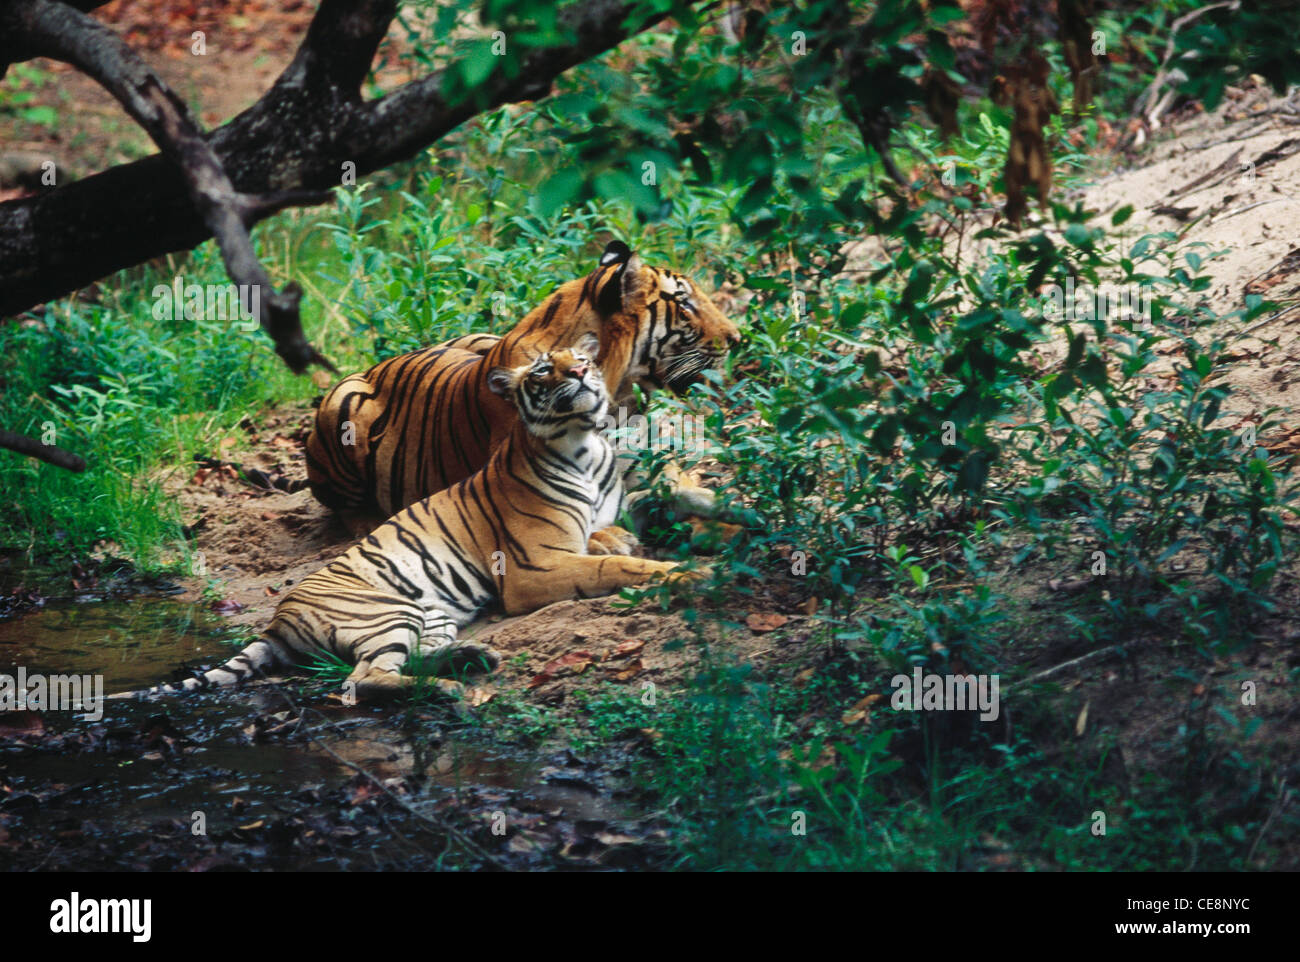 Couple de tigres au repos ; Panthera Tigris ; Parc national Bandhavgarh ; Parc national bandhavgarh ; madhya pradesh ; inde ; asie Banque D'Images